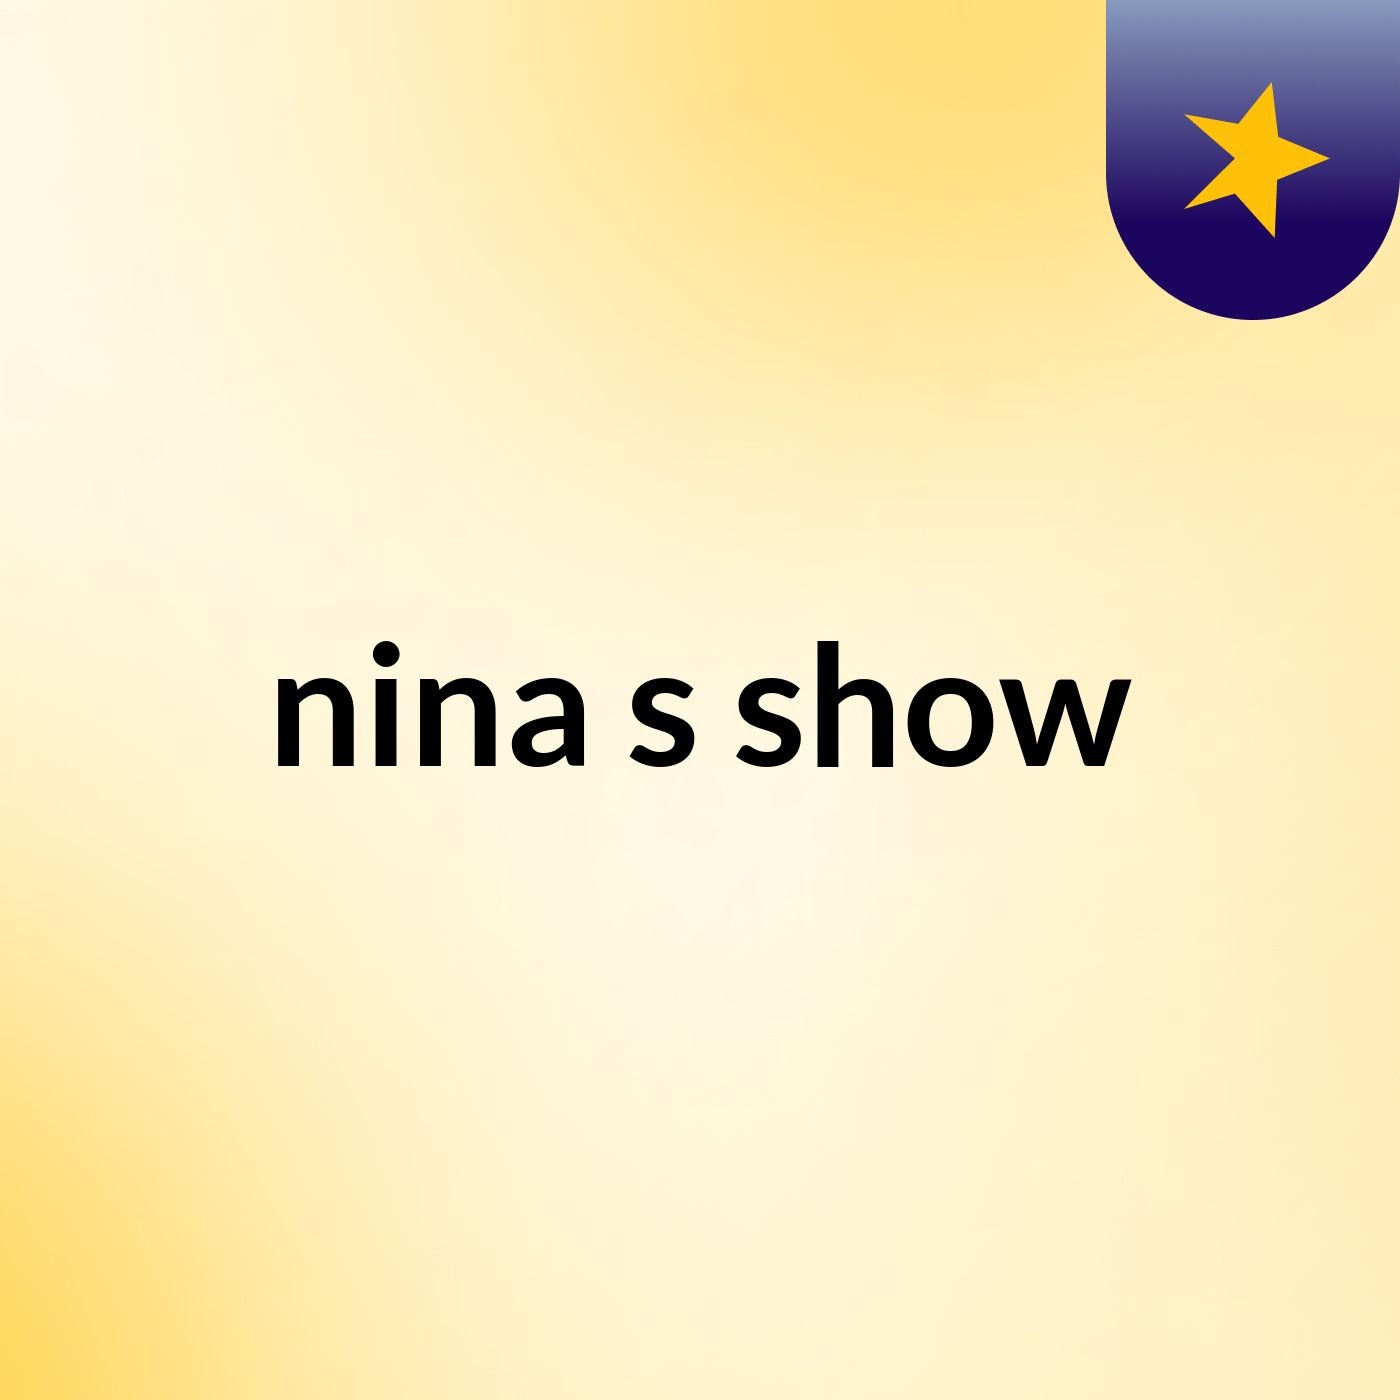 nina's show